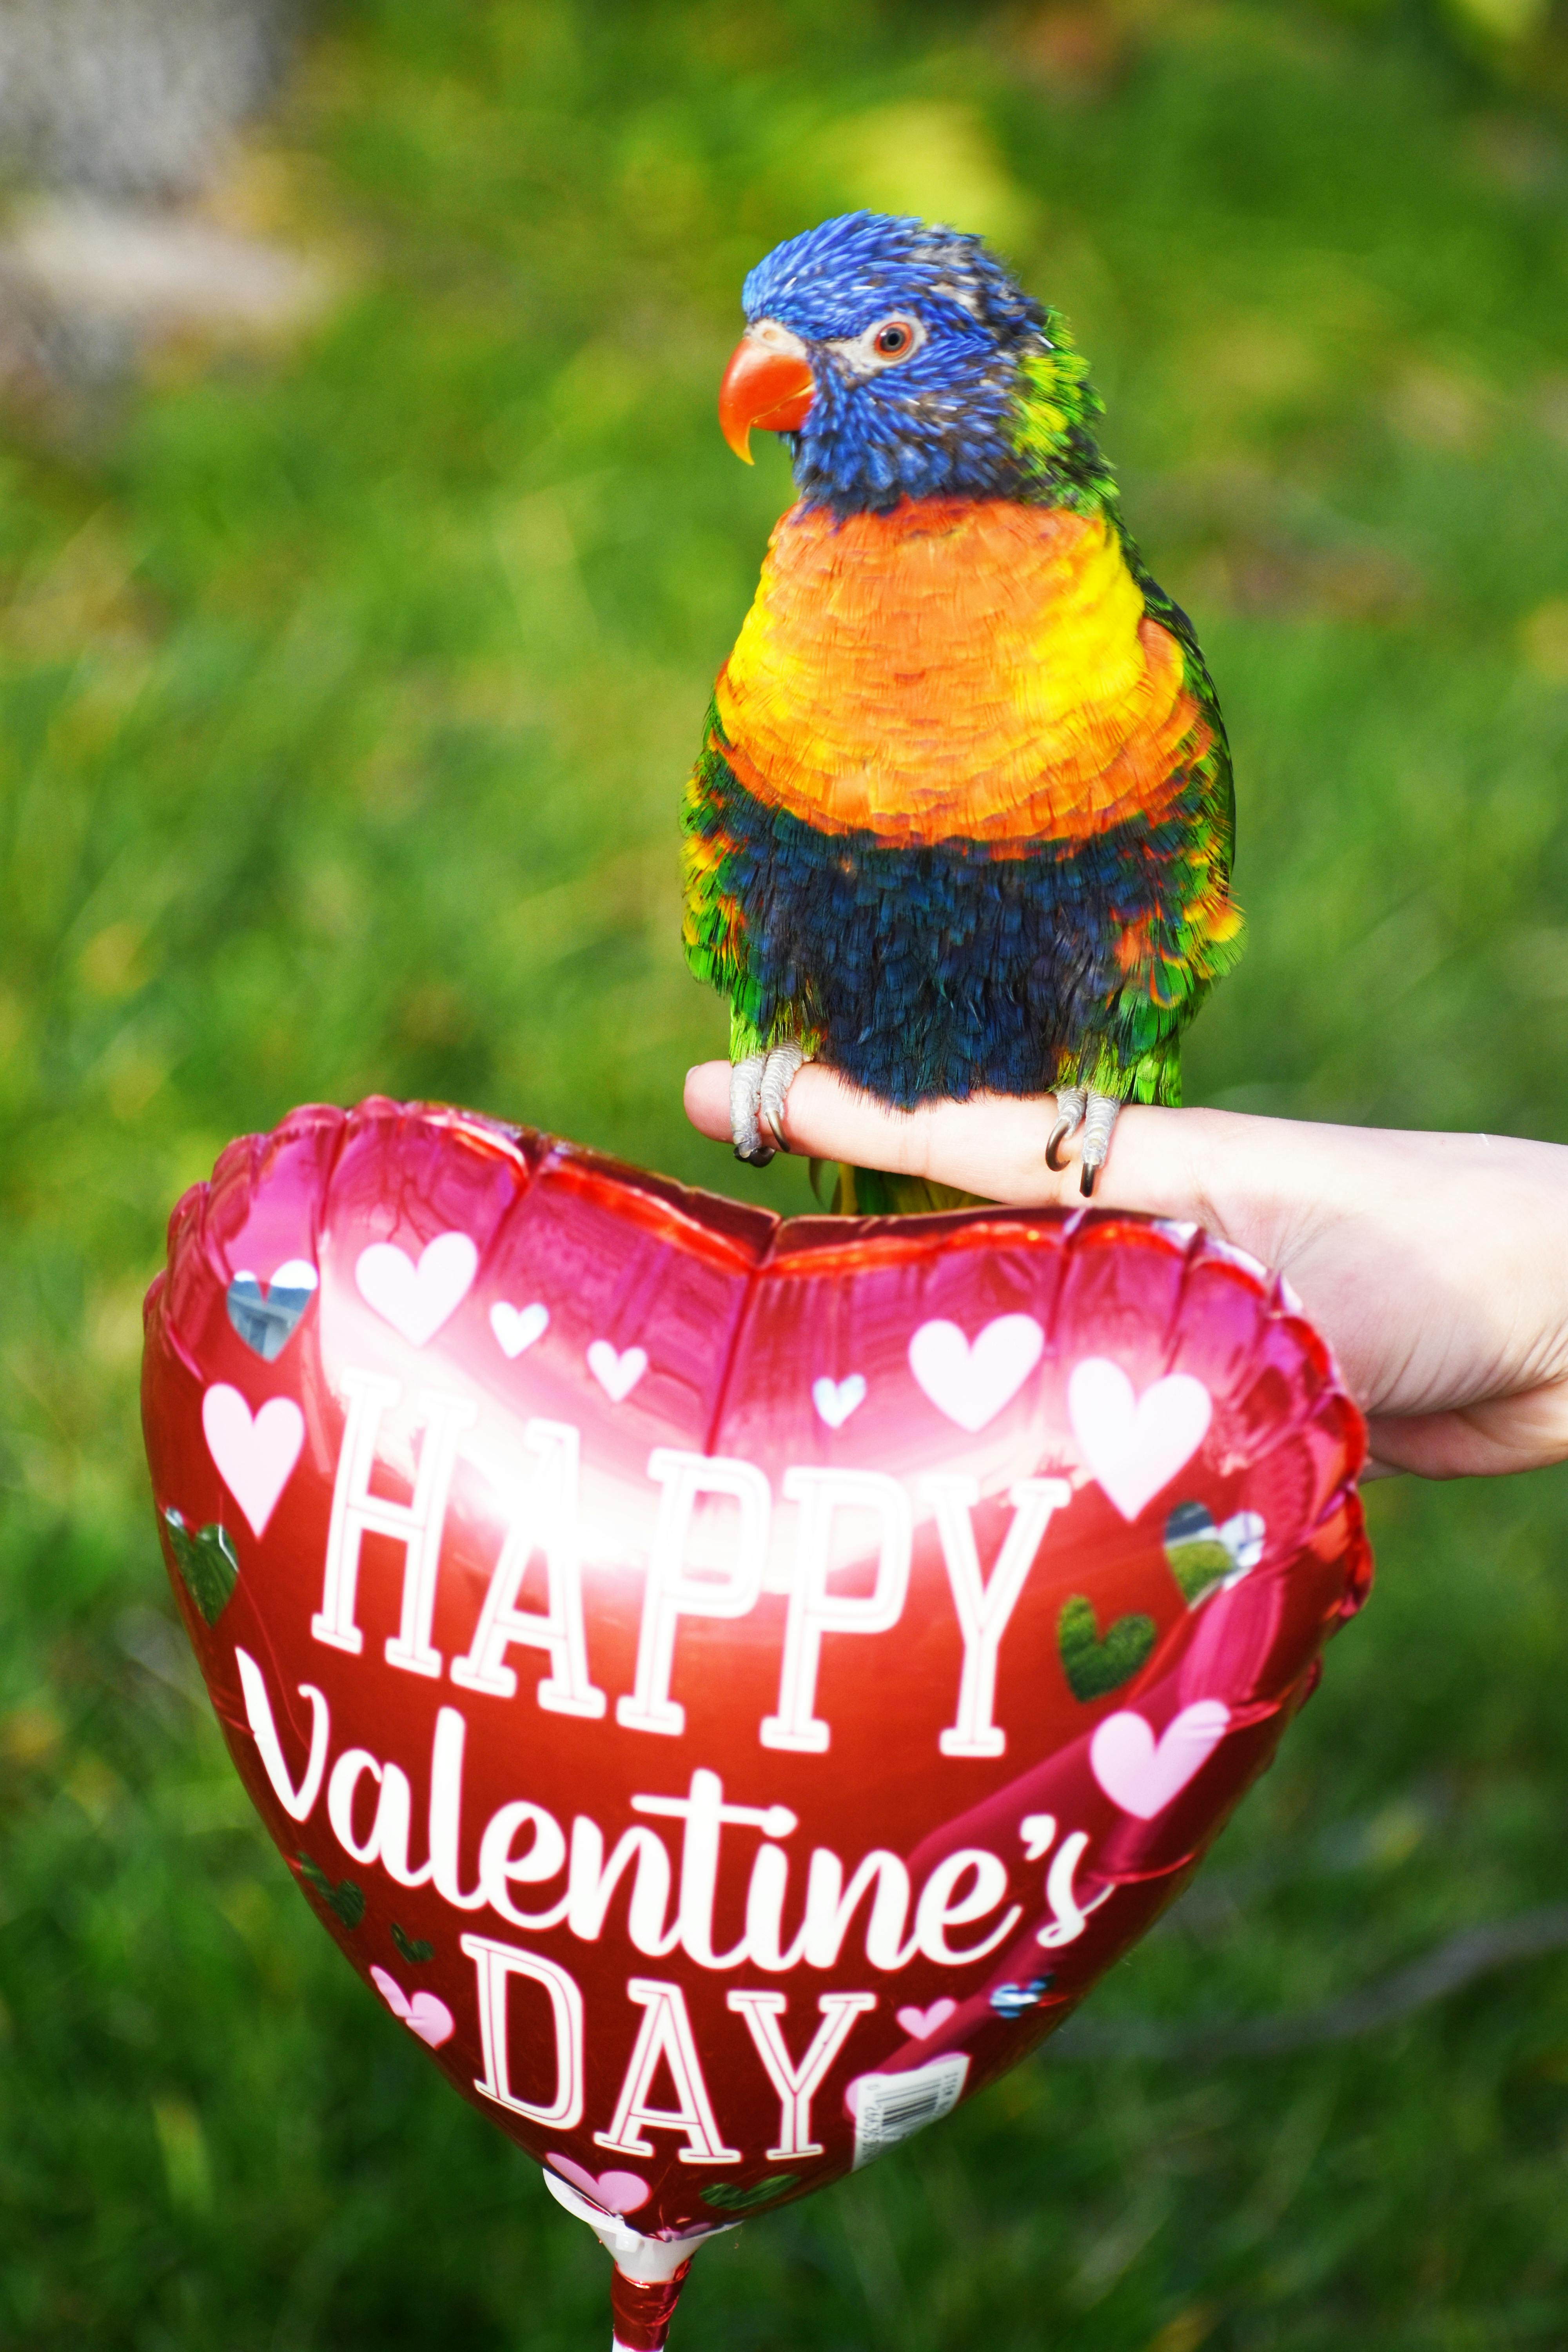 Love Bird Photos, Download The BEST Free Love Bird Stock Photos & HD Images